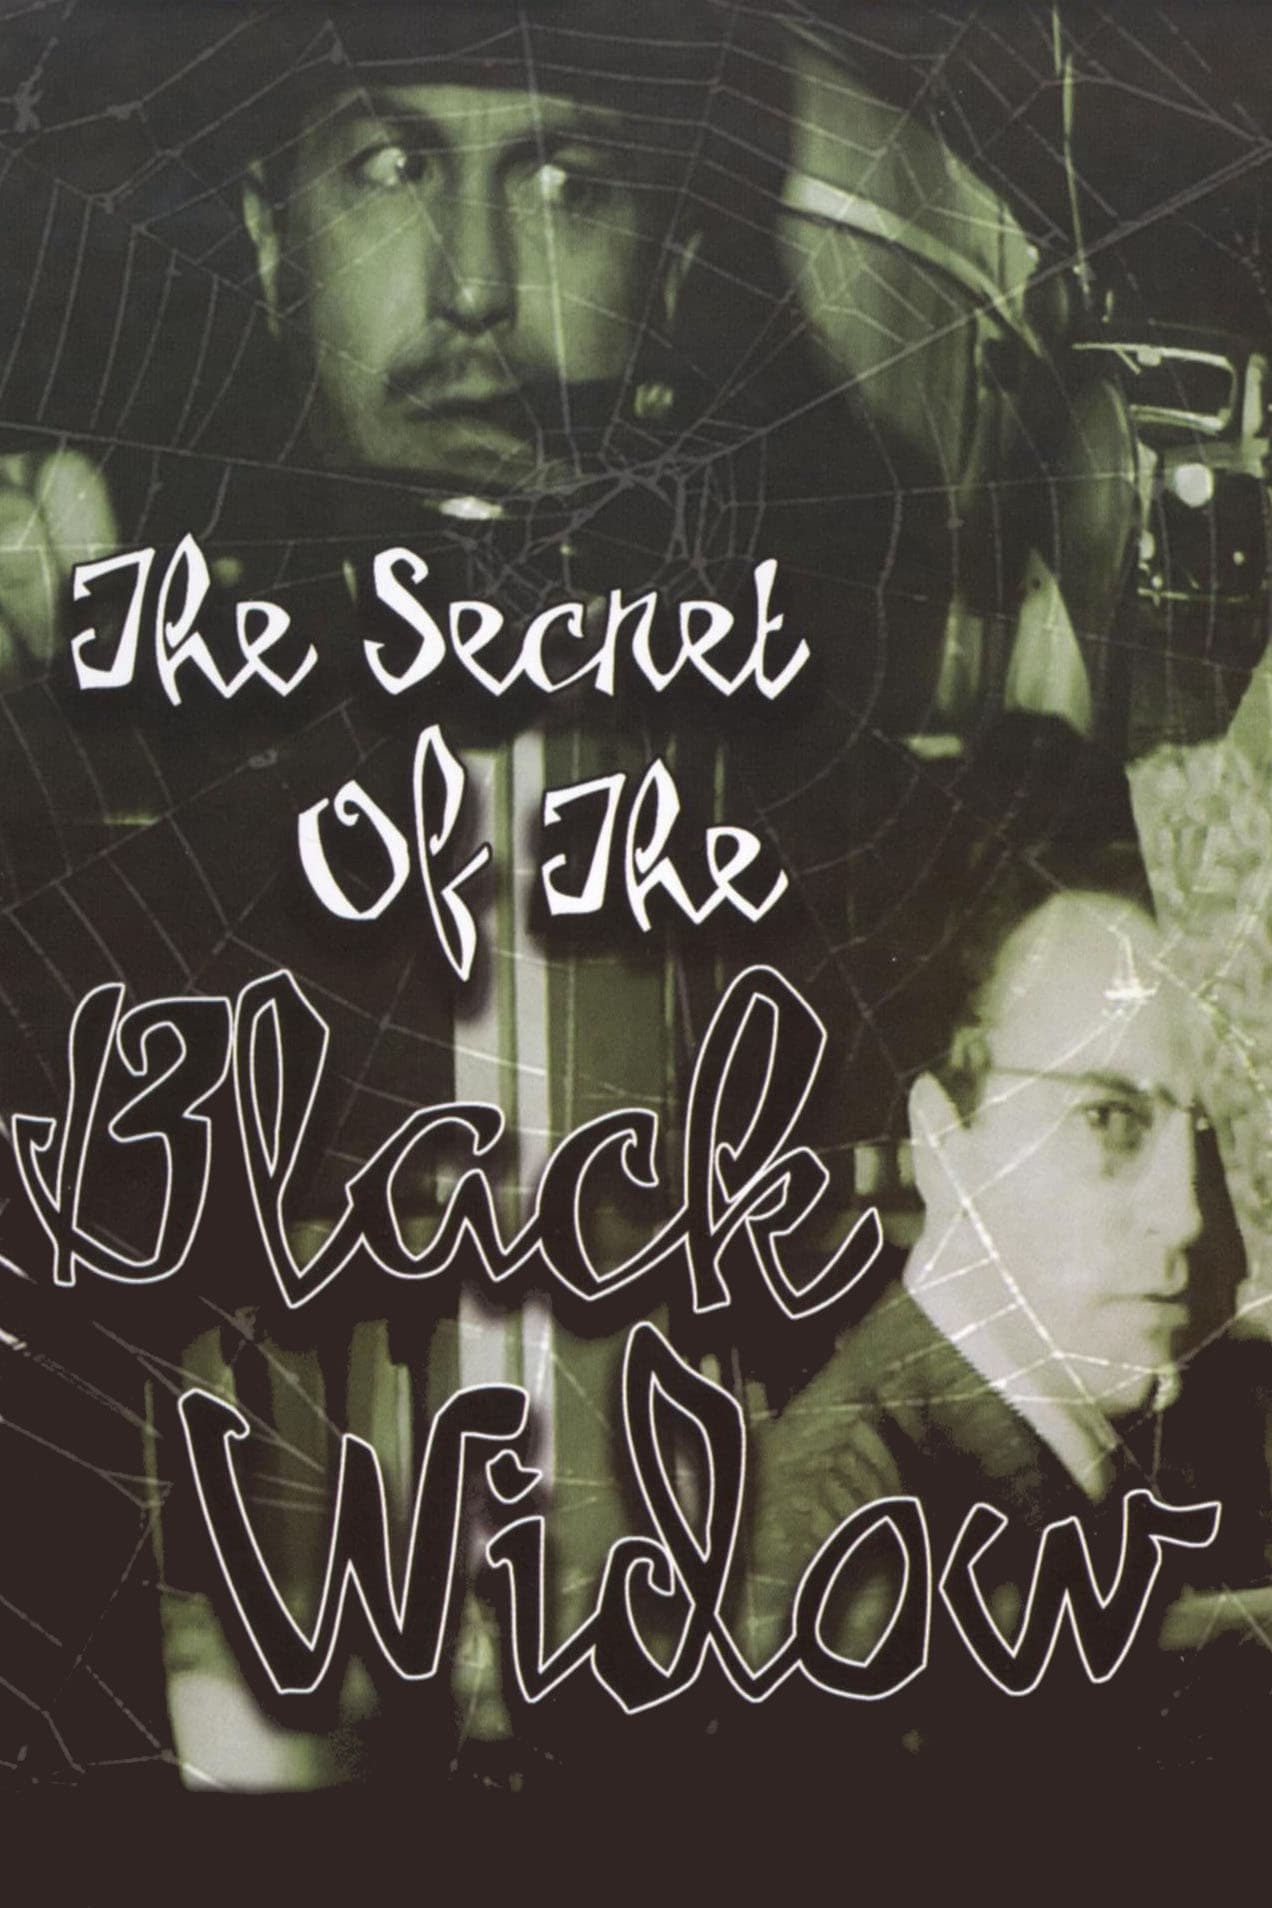 The Secret of the Black Widow (1963)